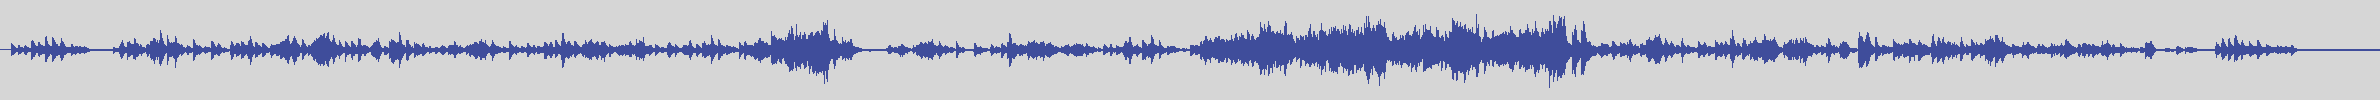 big_music_classic [BMC001] Frédéric Chopin, C Red - Mazurka Op.17 N.4 [] audio wave form